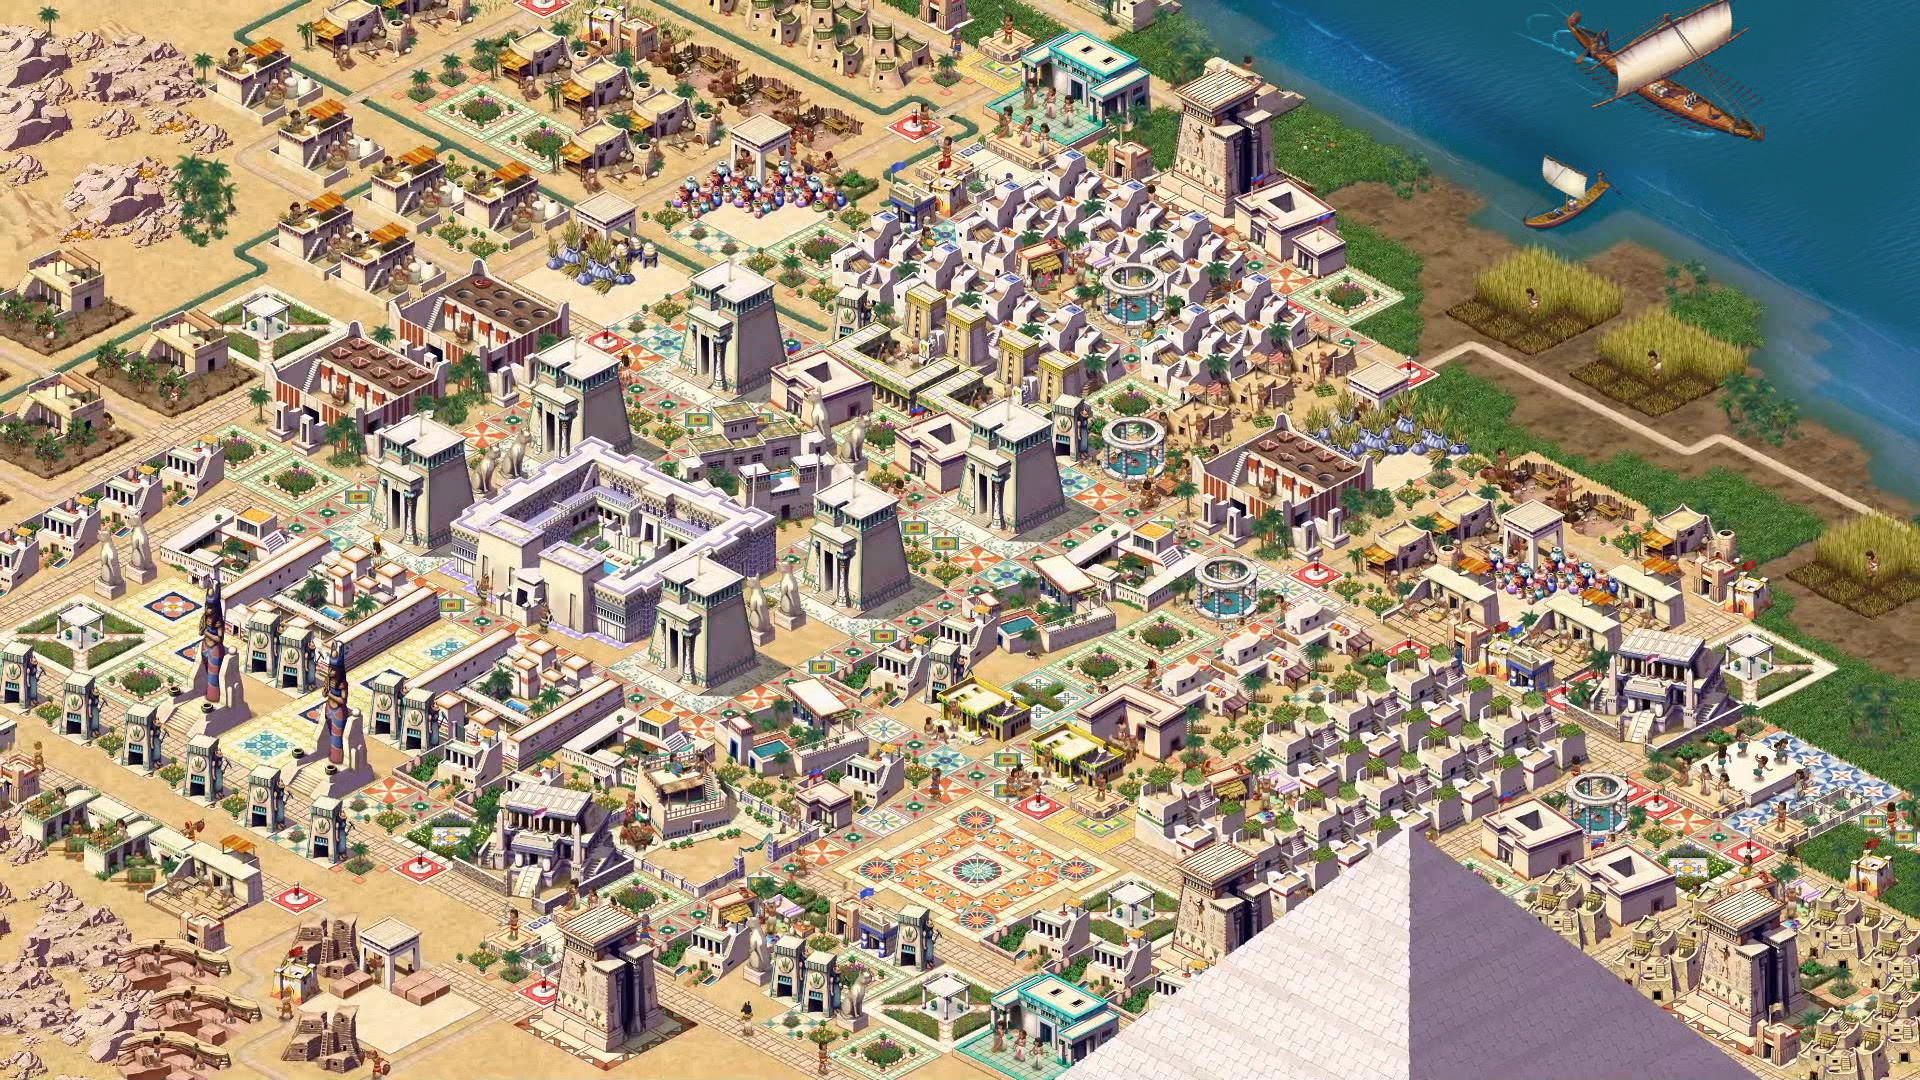 Alerte nostalgie : un remake du city builder culte Pharaon arrive en 2021